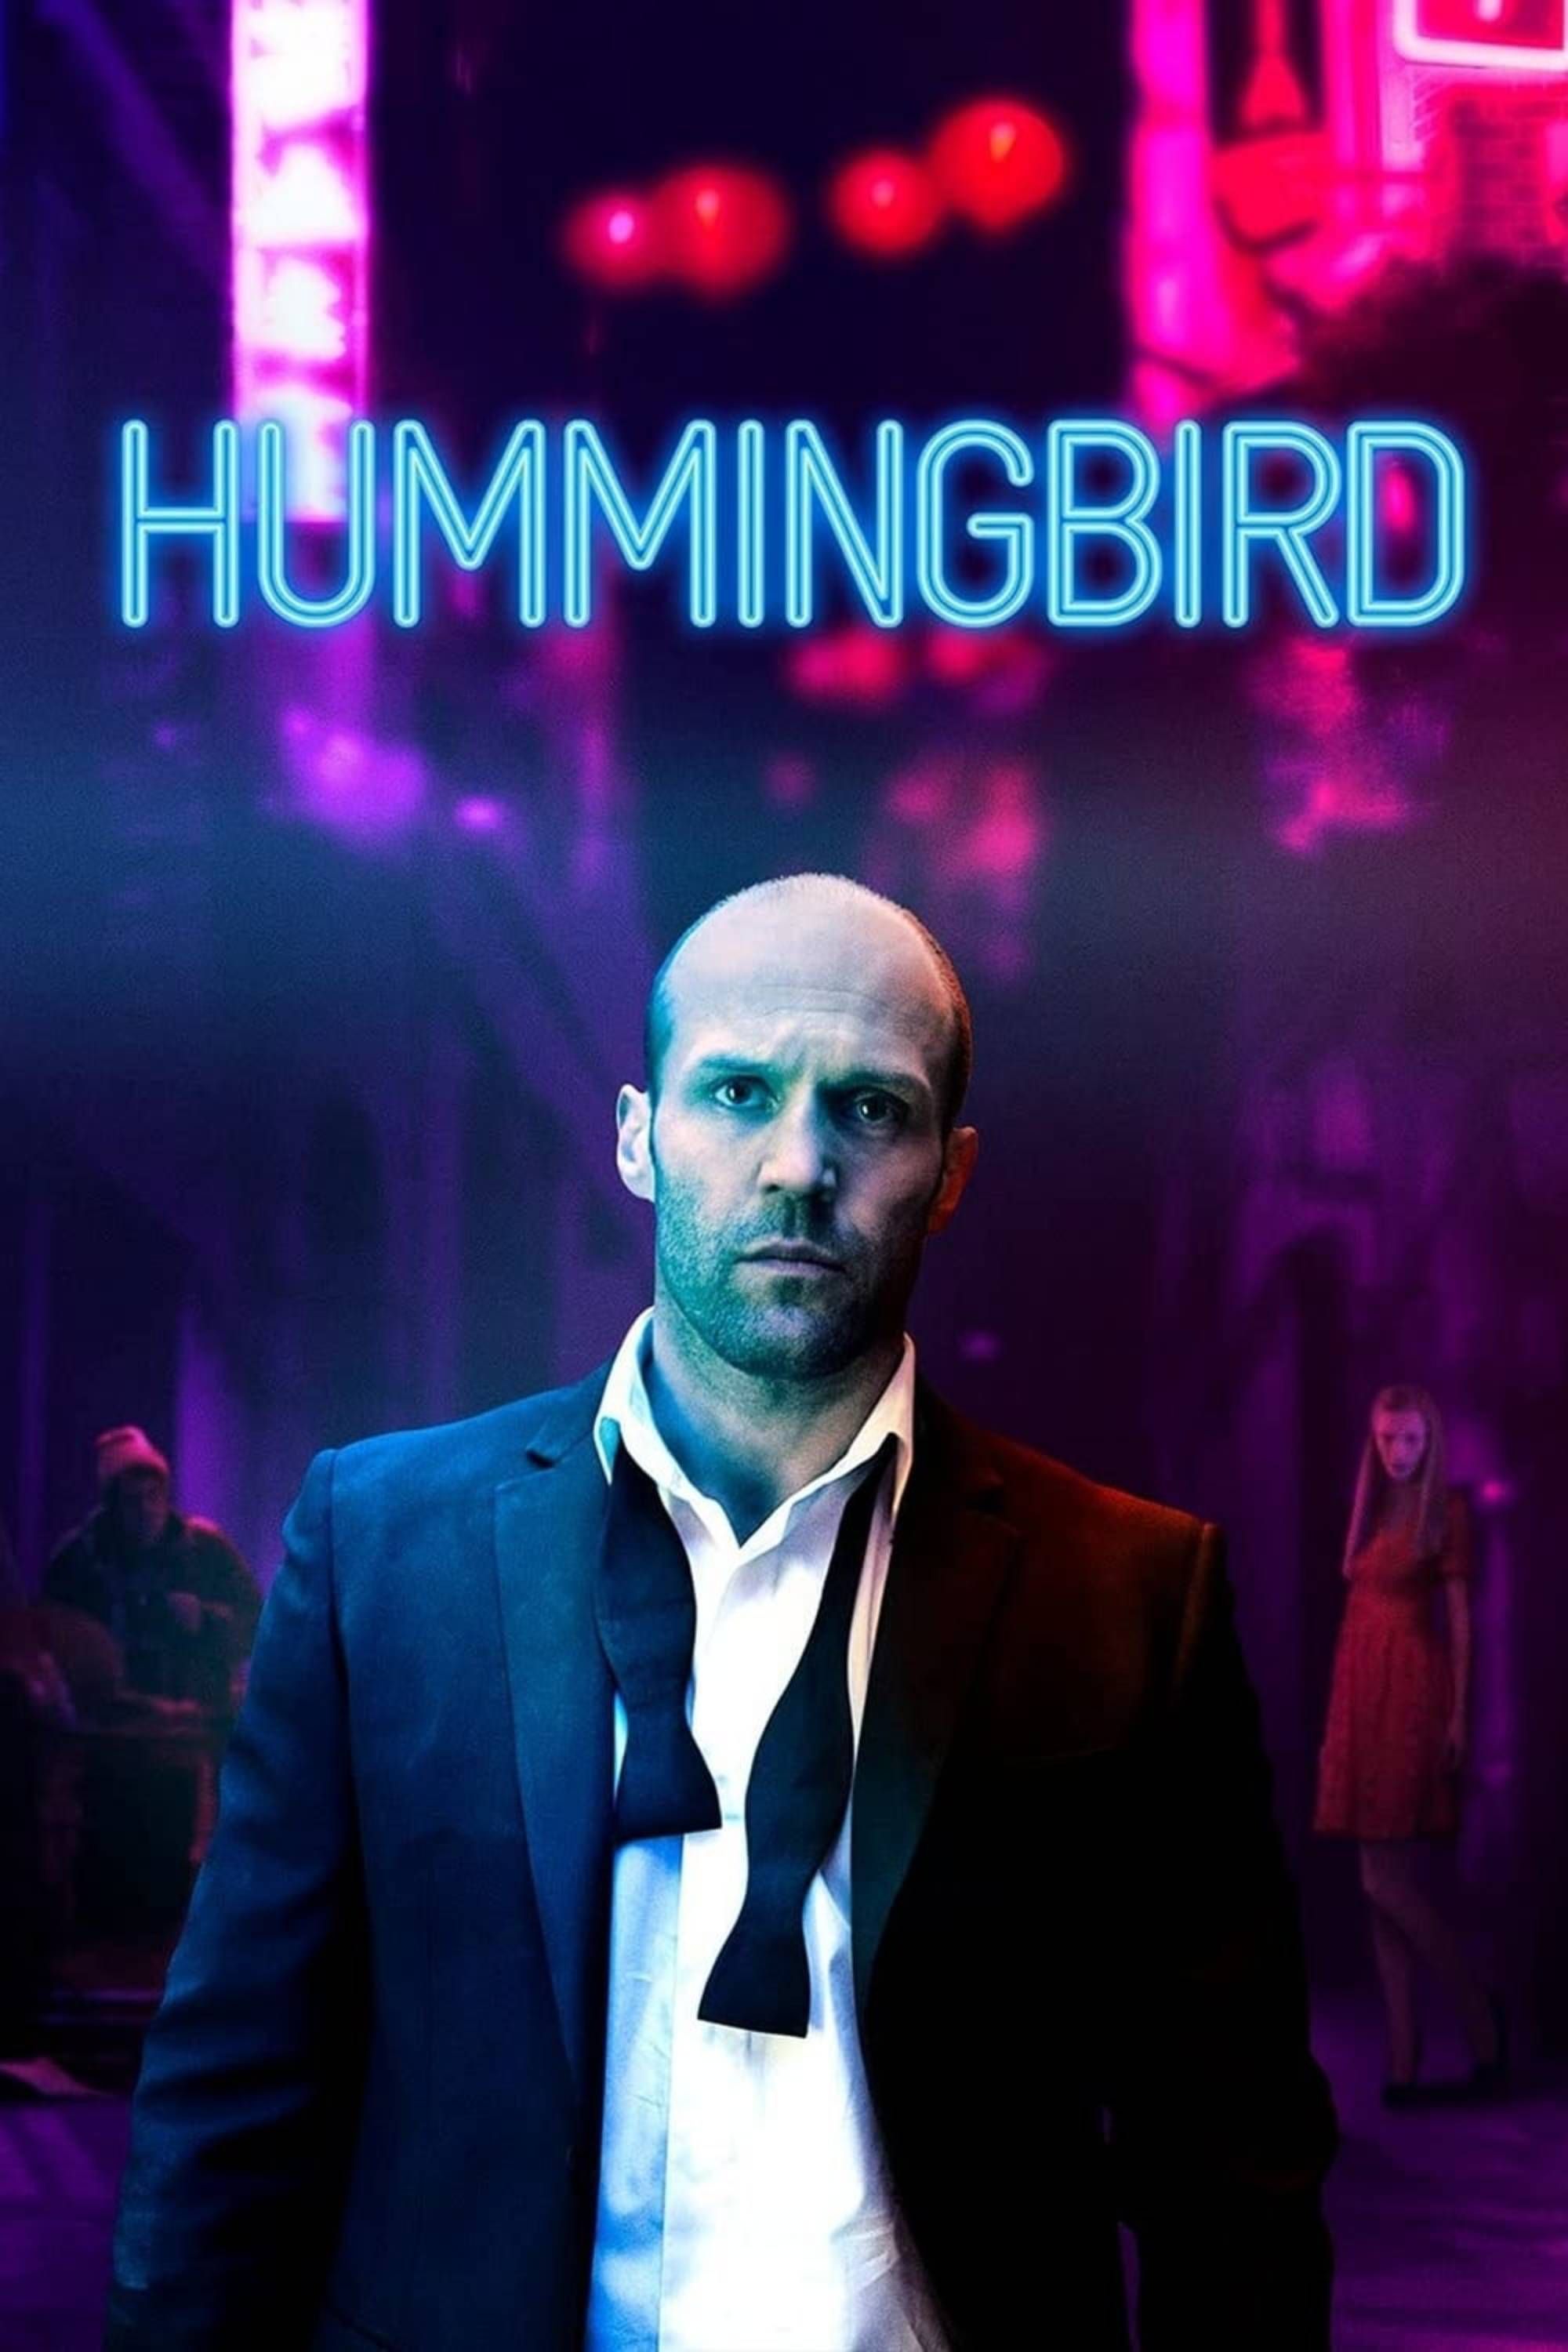 Hummingbird (2013) - Pôster - Jason Statham em um terno